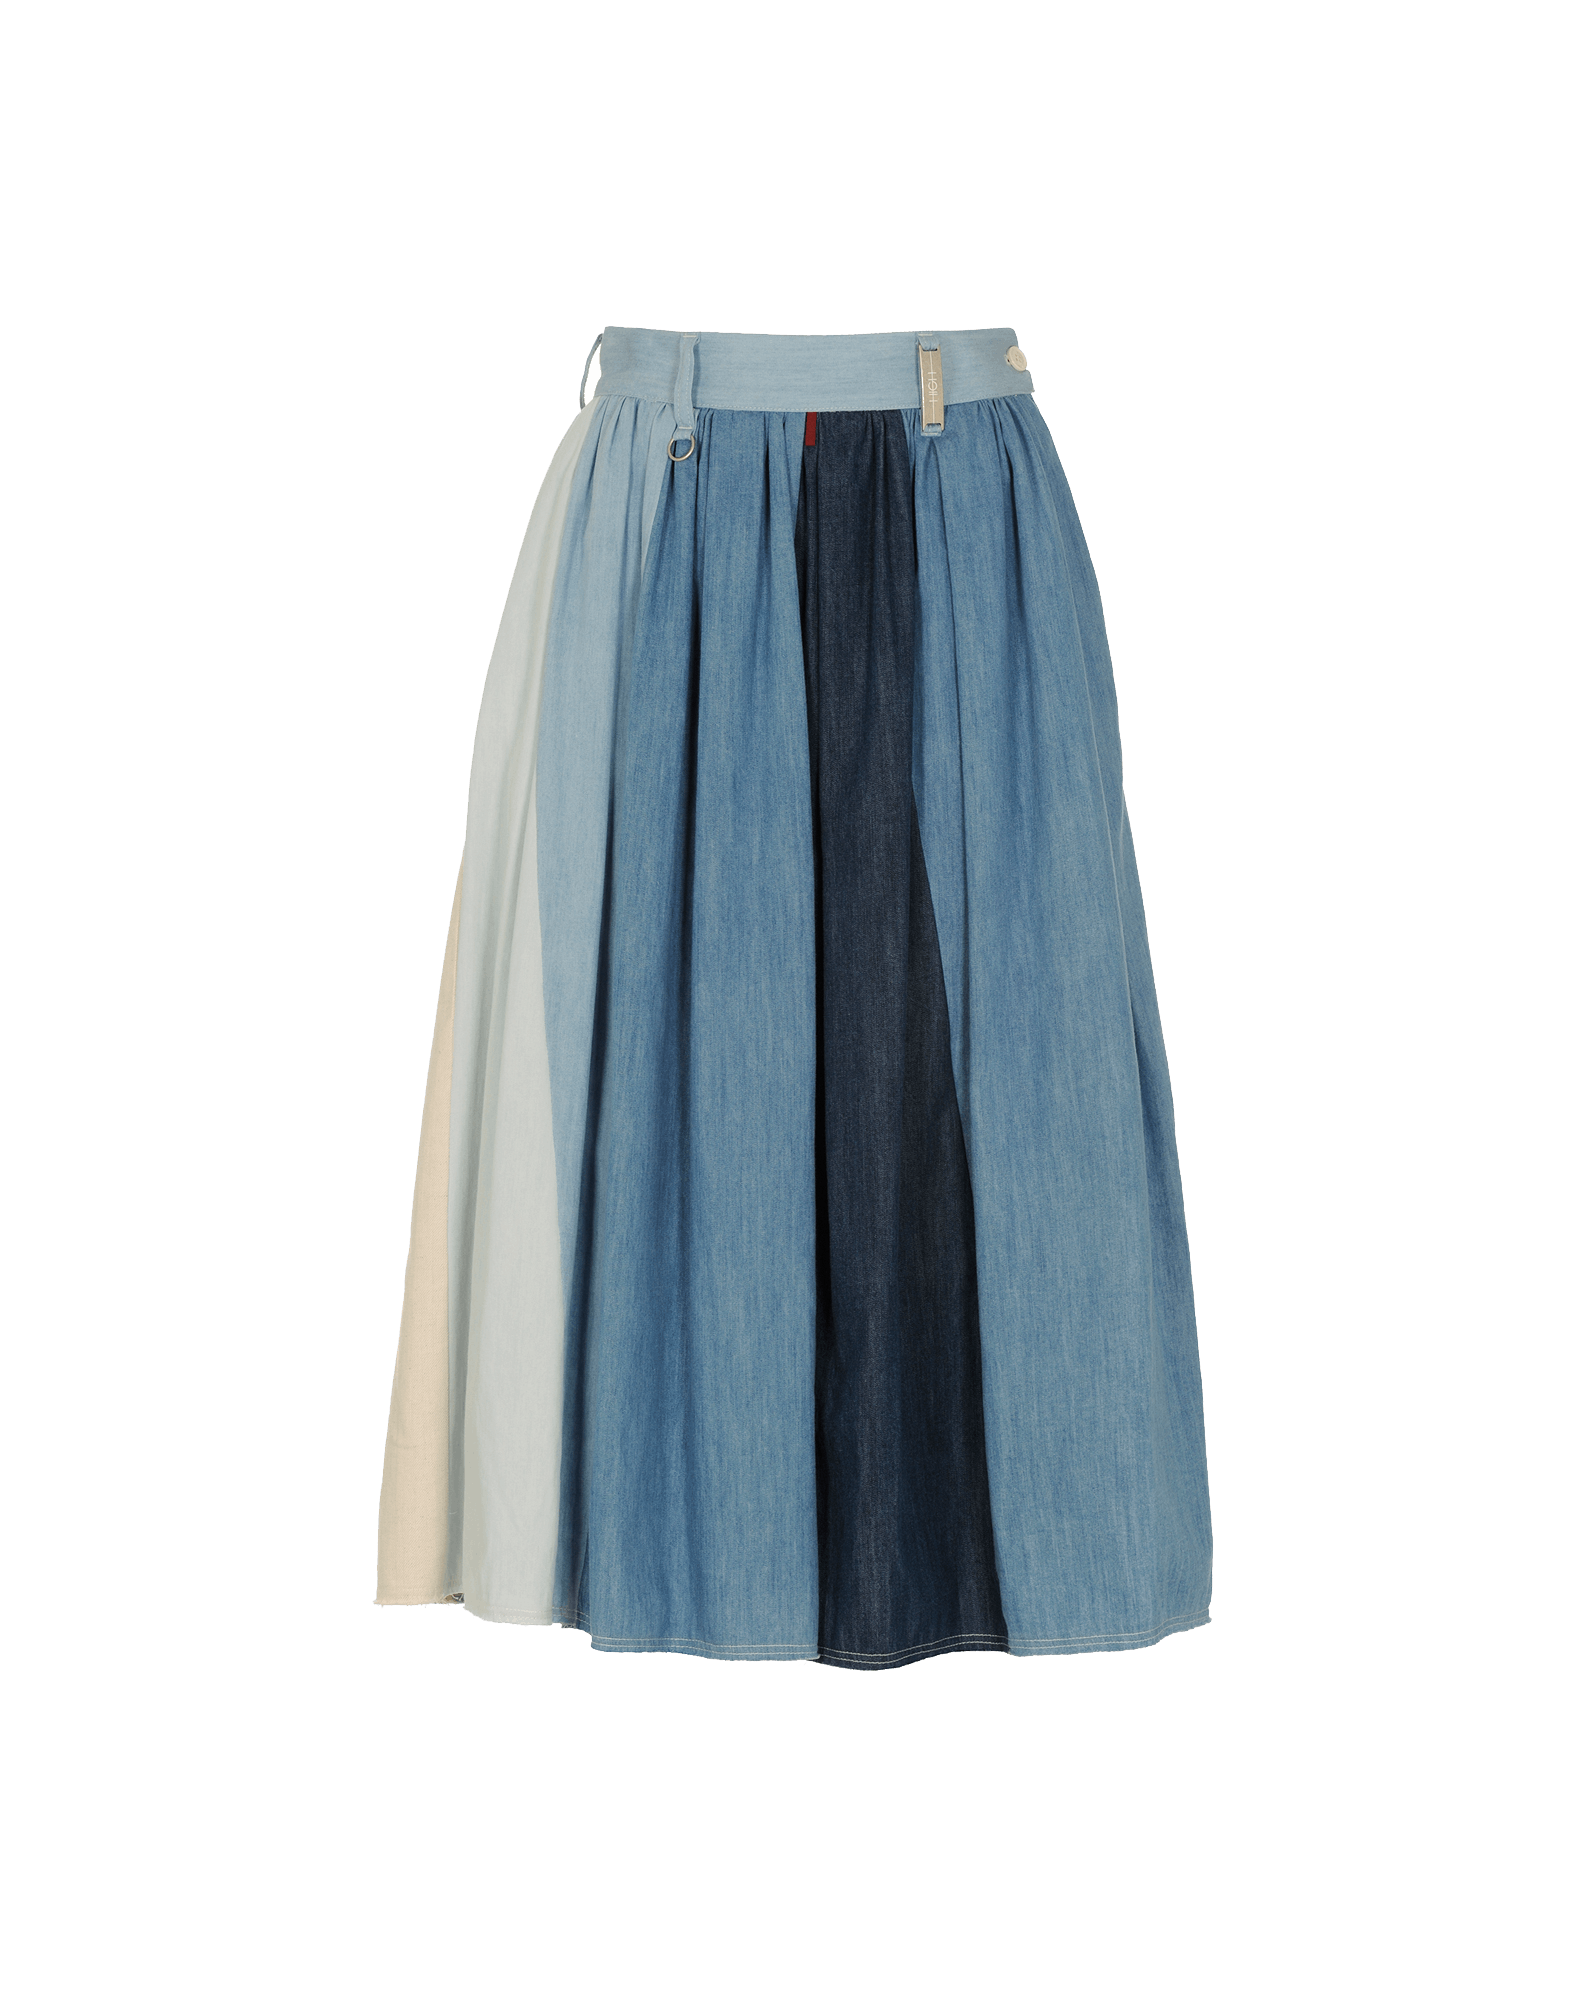 denim skirt with belt loops